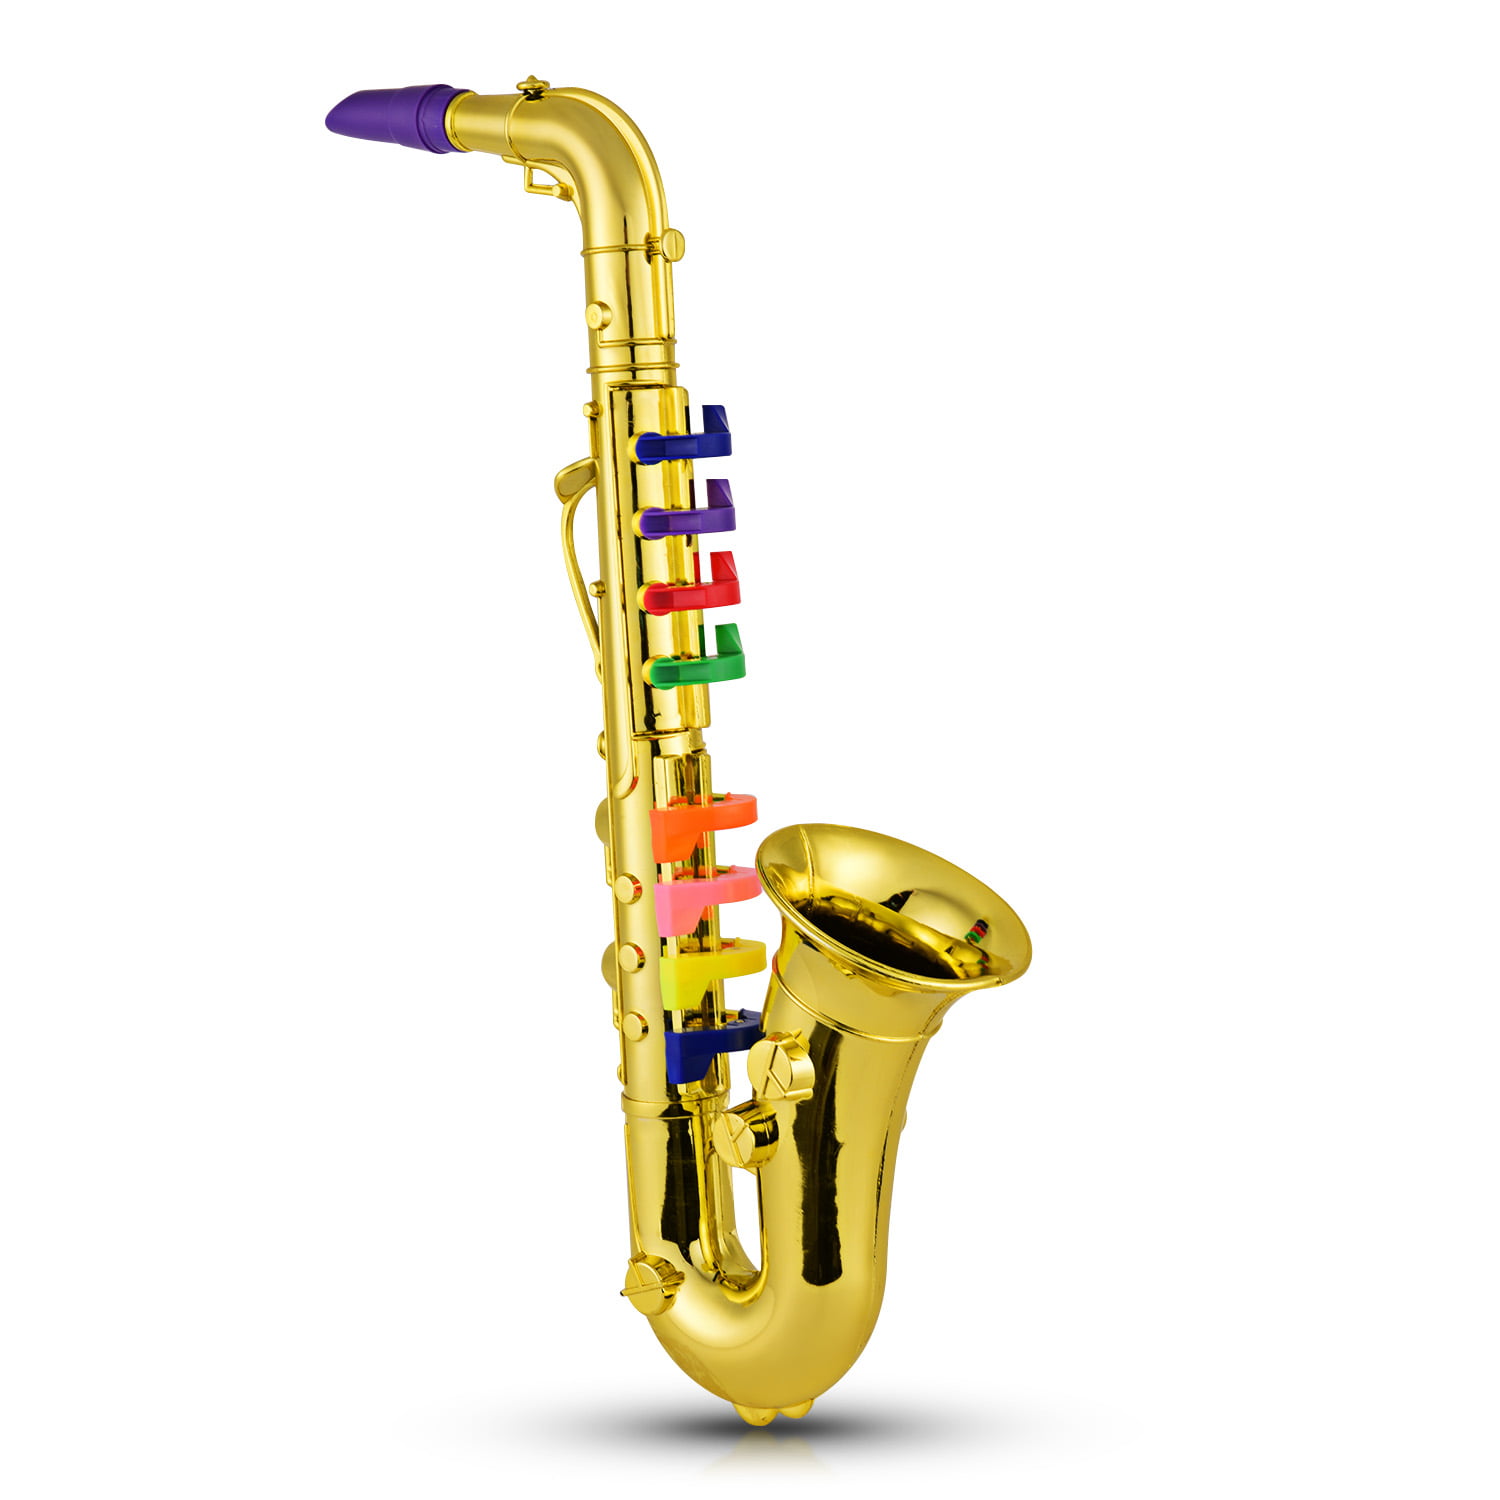 Tomshine Saxophone Kids Musical Wind ABS Metallic Gold with 8 Keys - Walmart.com